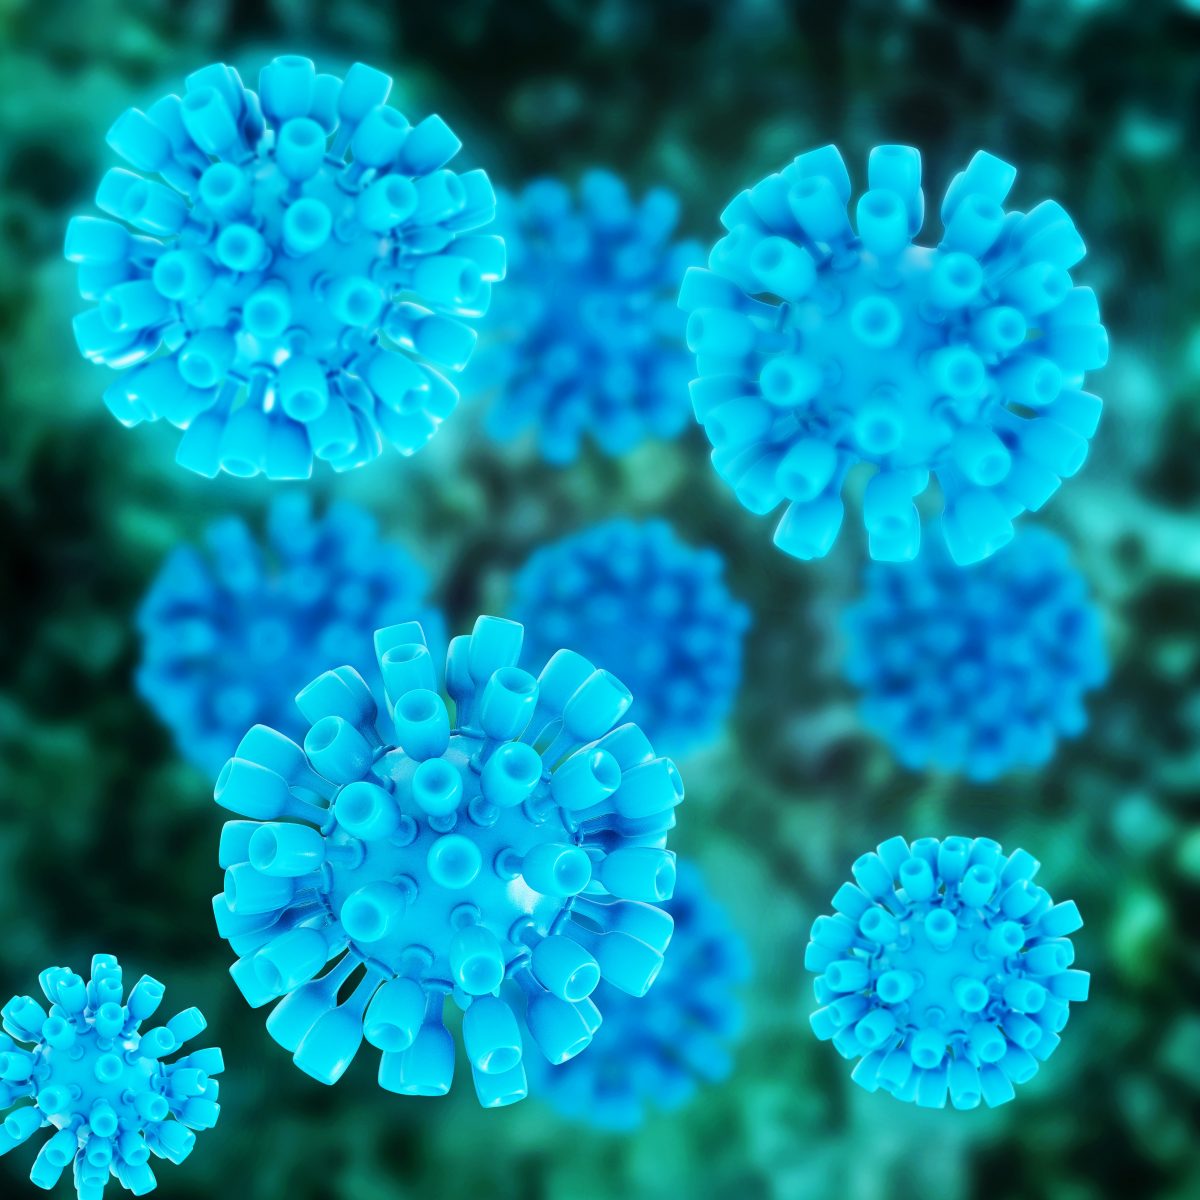 Hepatitis C Virus May Be a Promising Agent Against an Array of Viruses